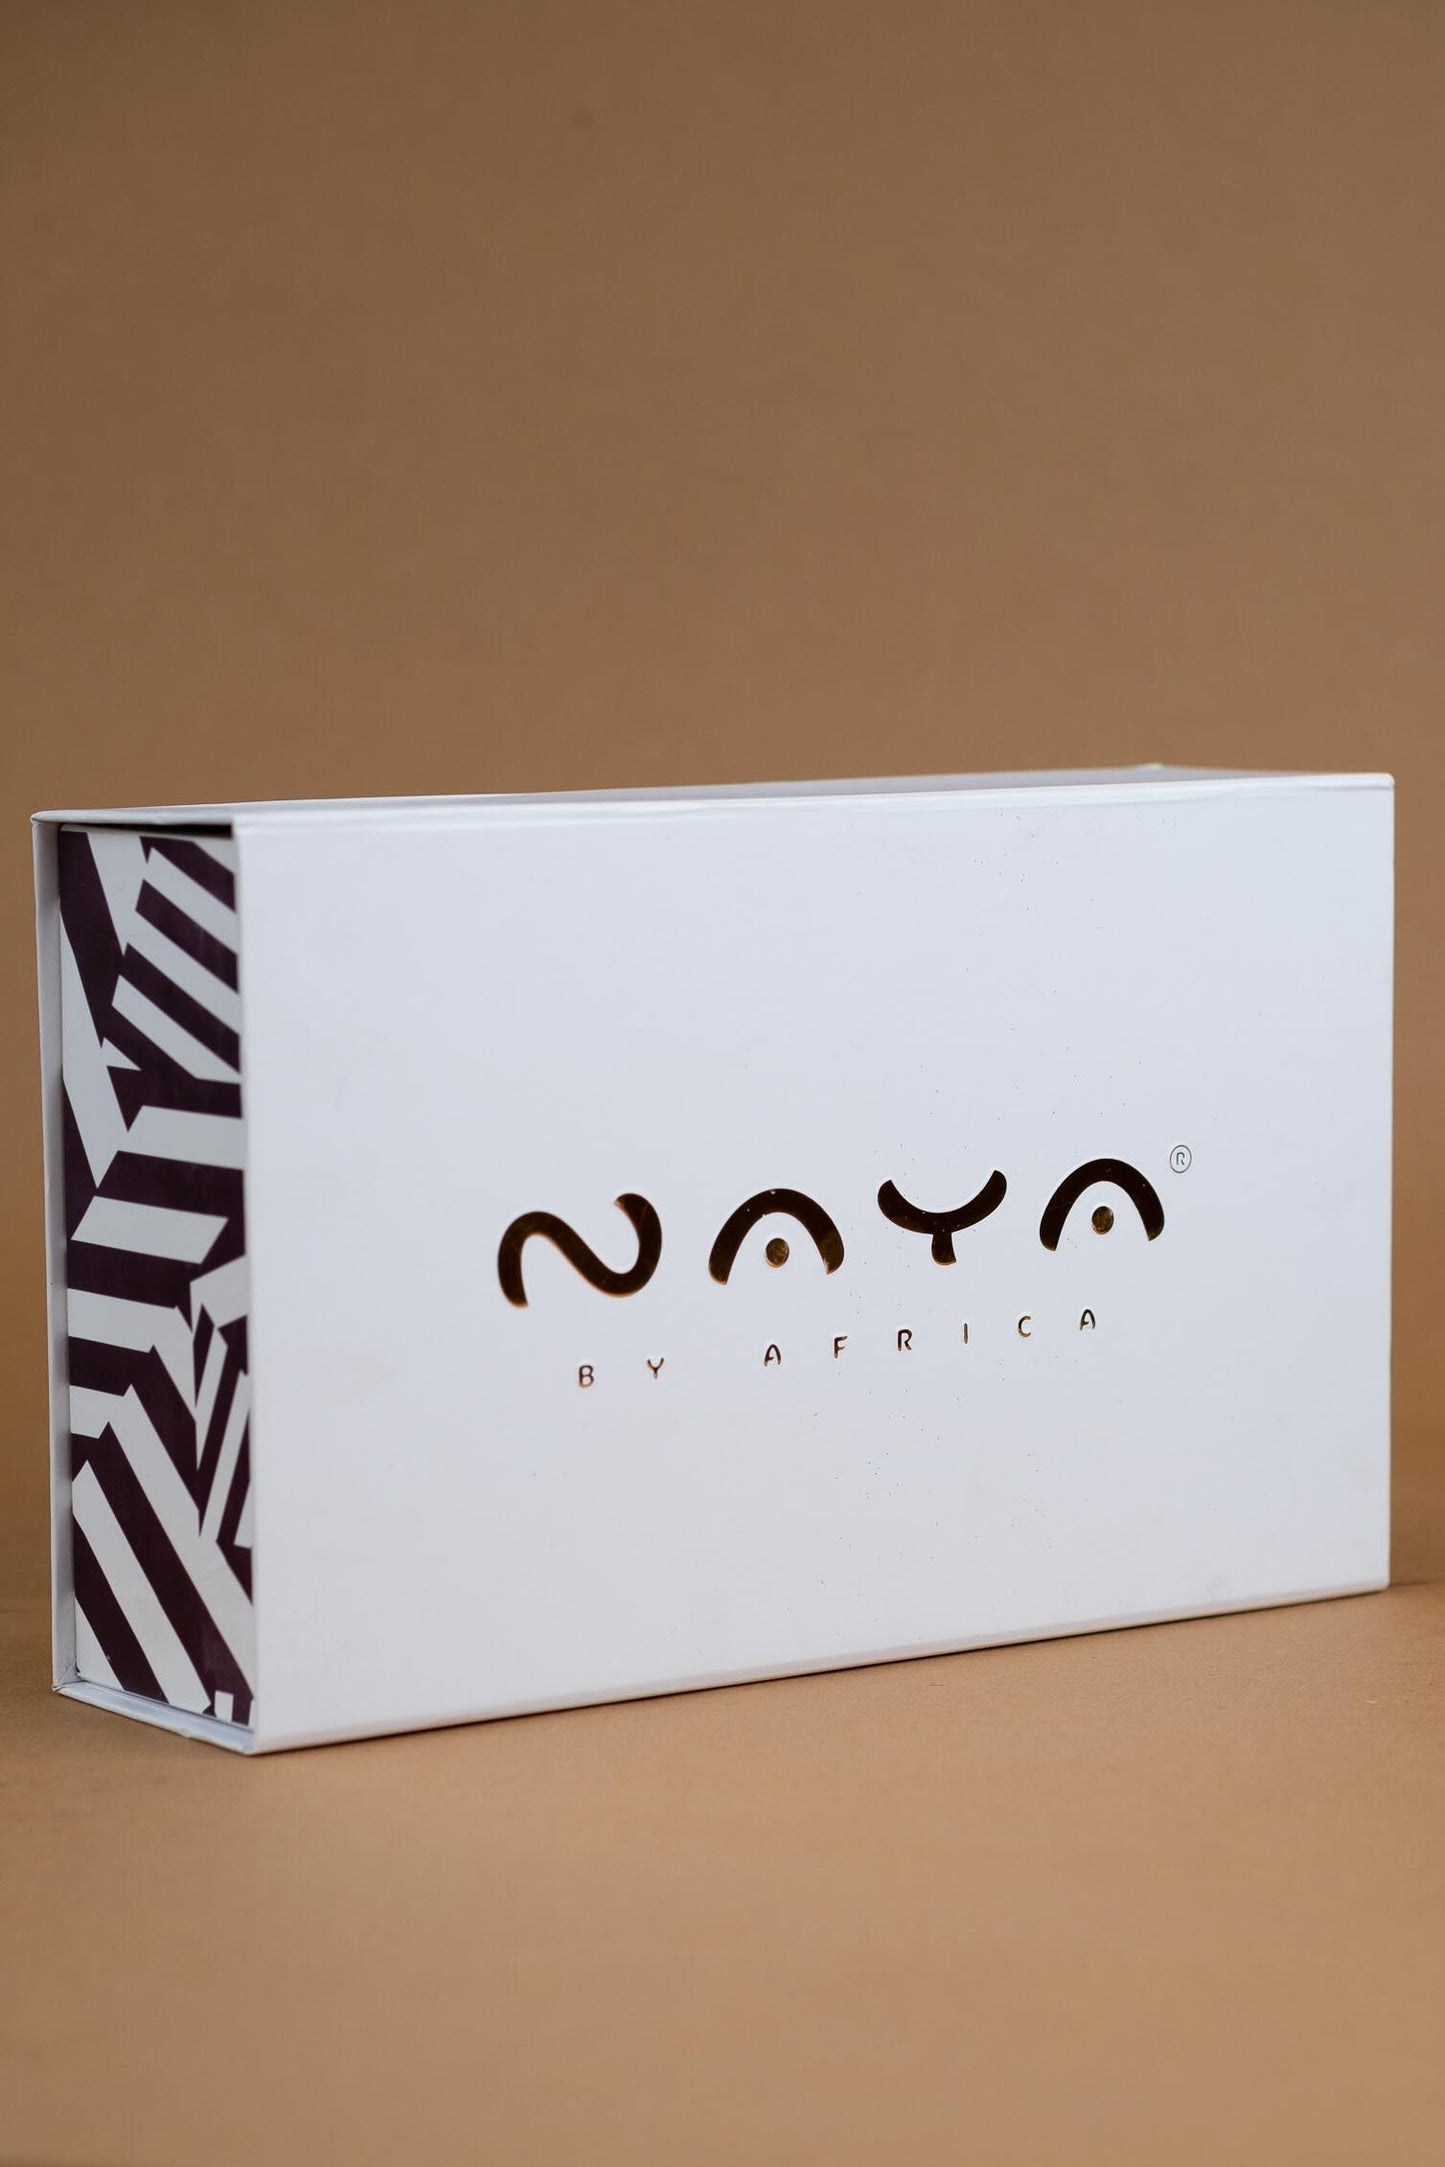 Nana Medaase Gift Box